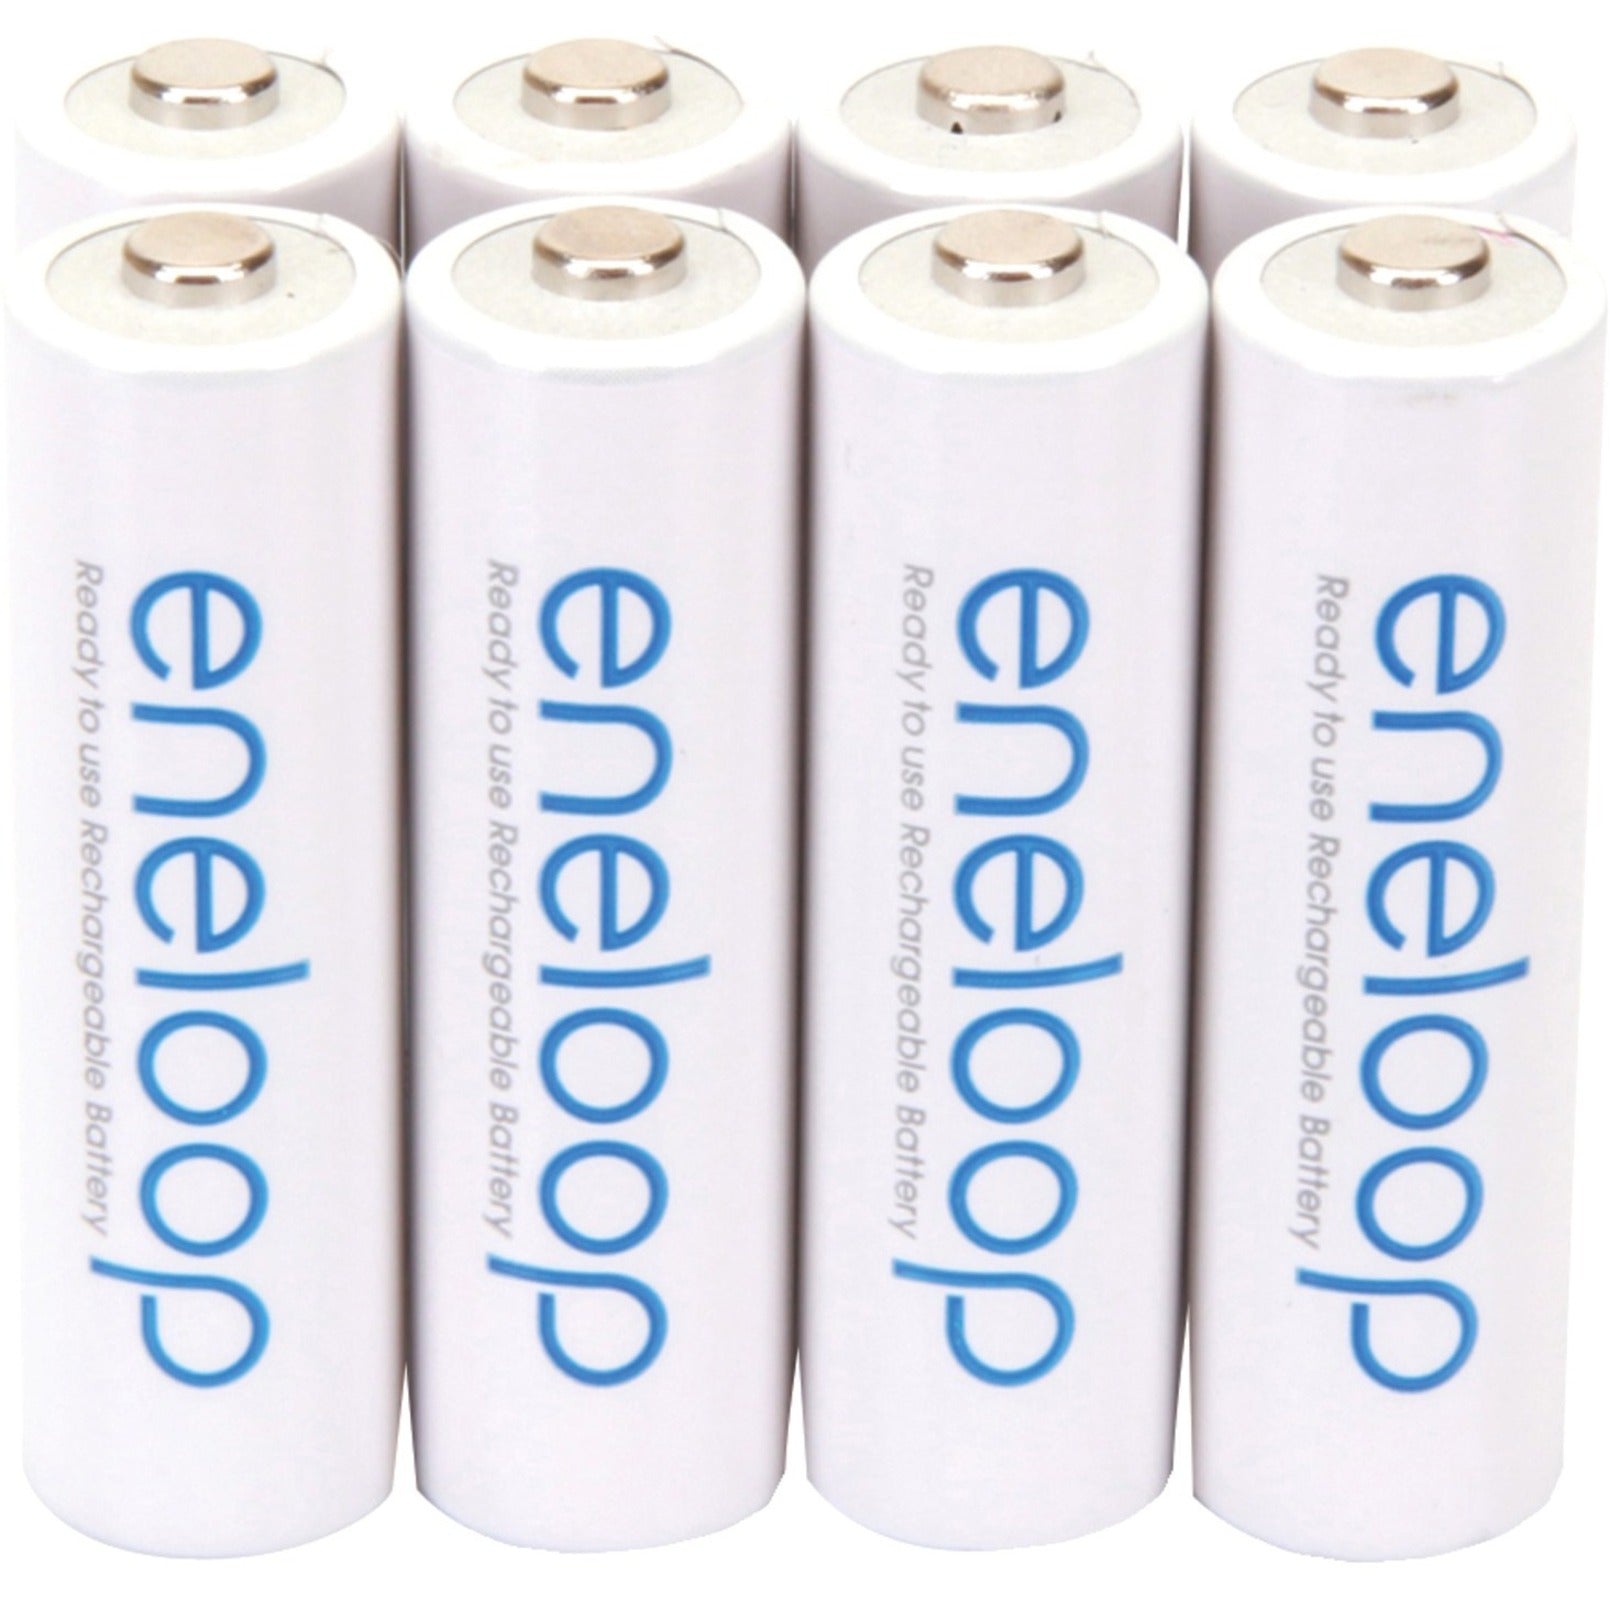 Panasonic Eneloop C Size Battery Adapters for Use With Eneloop AA